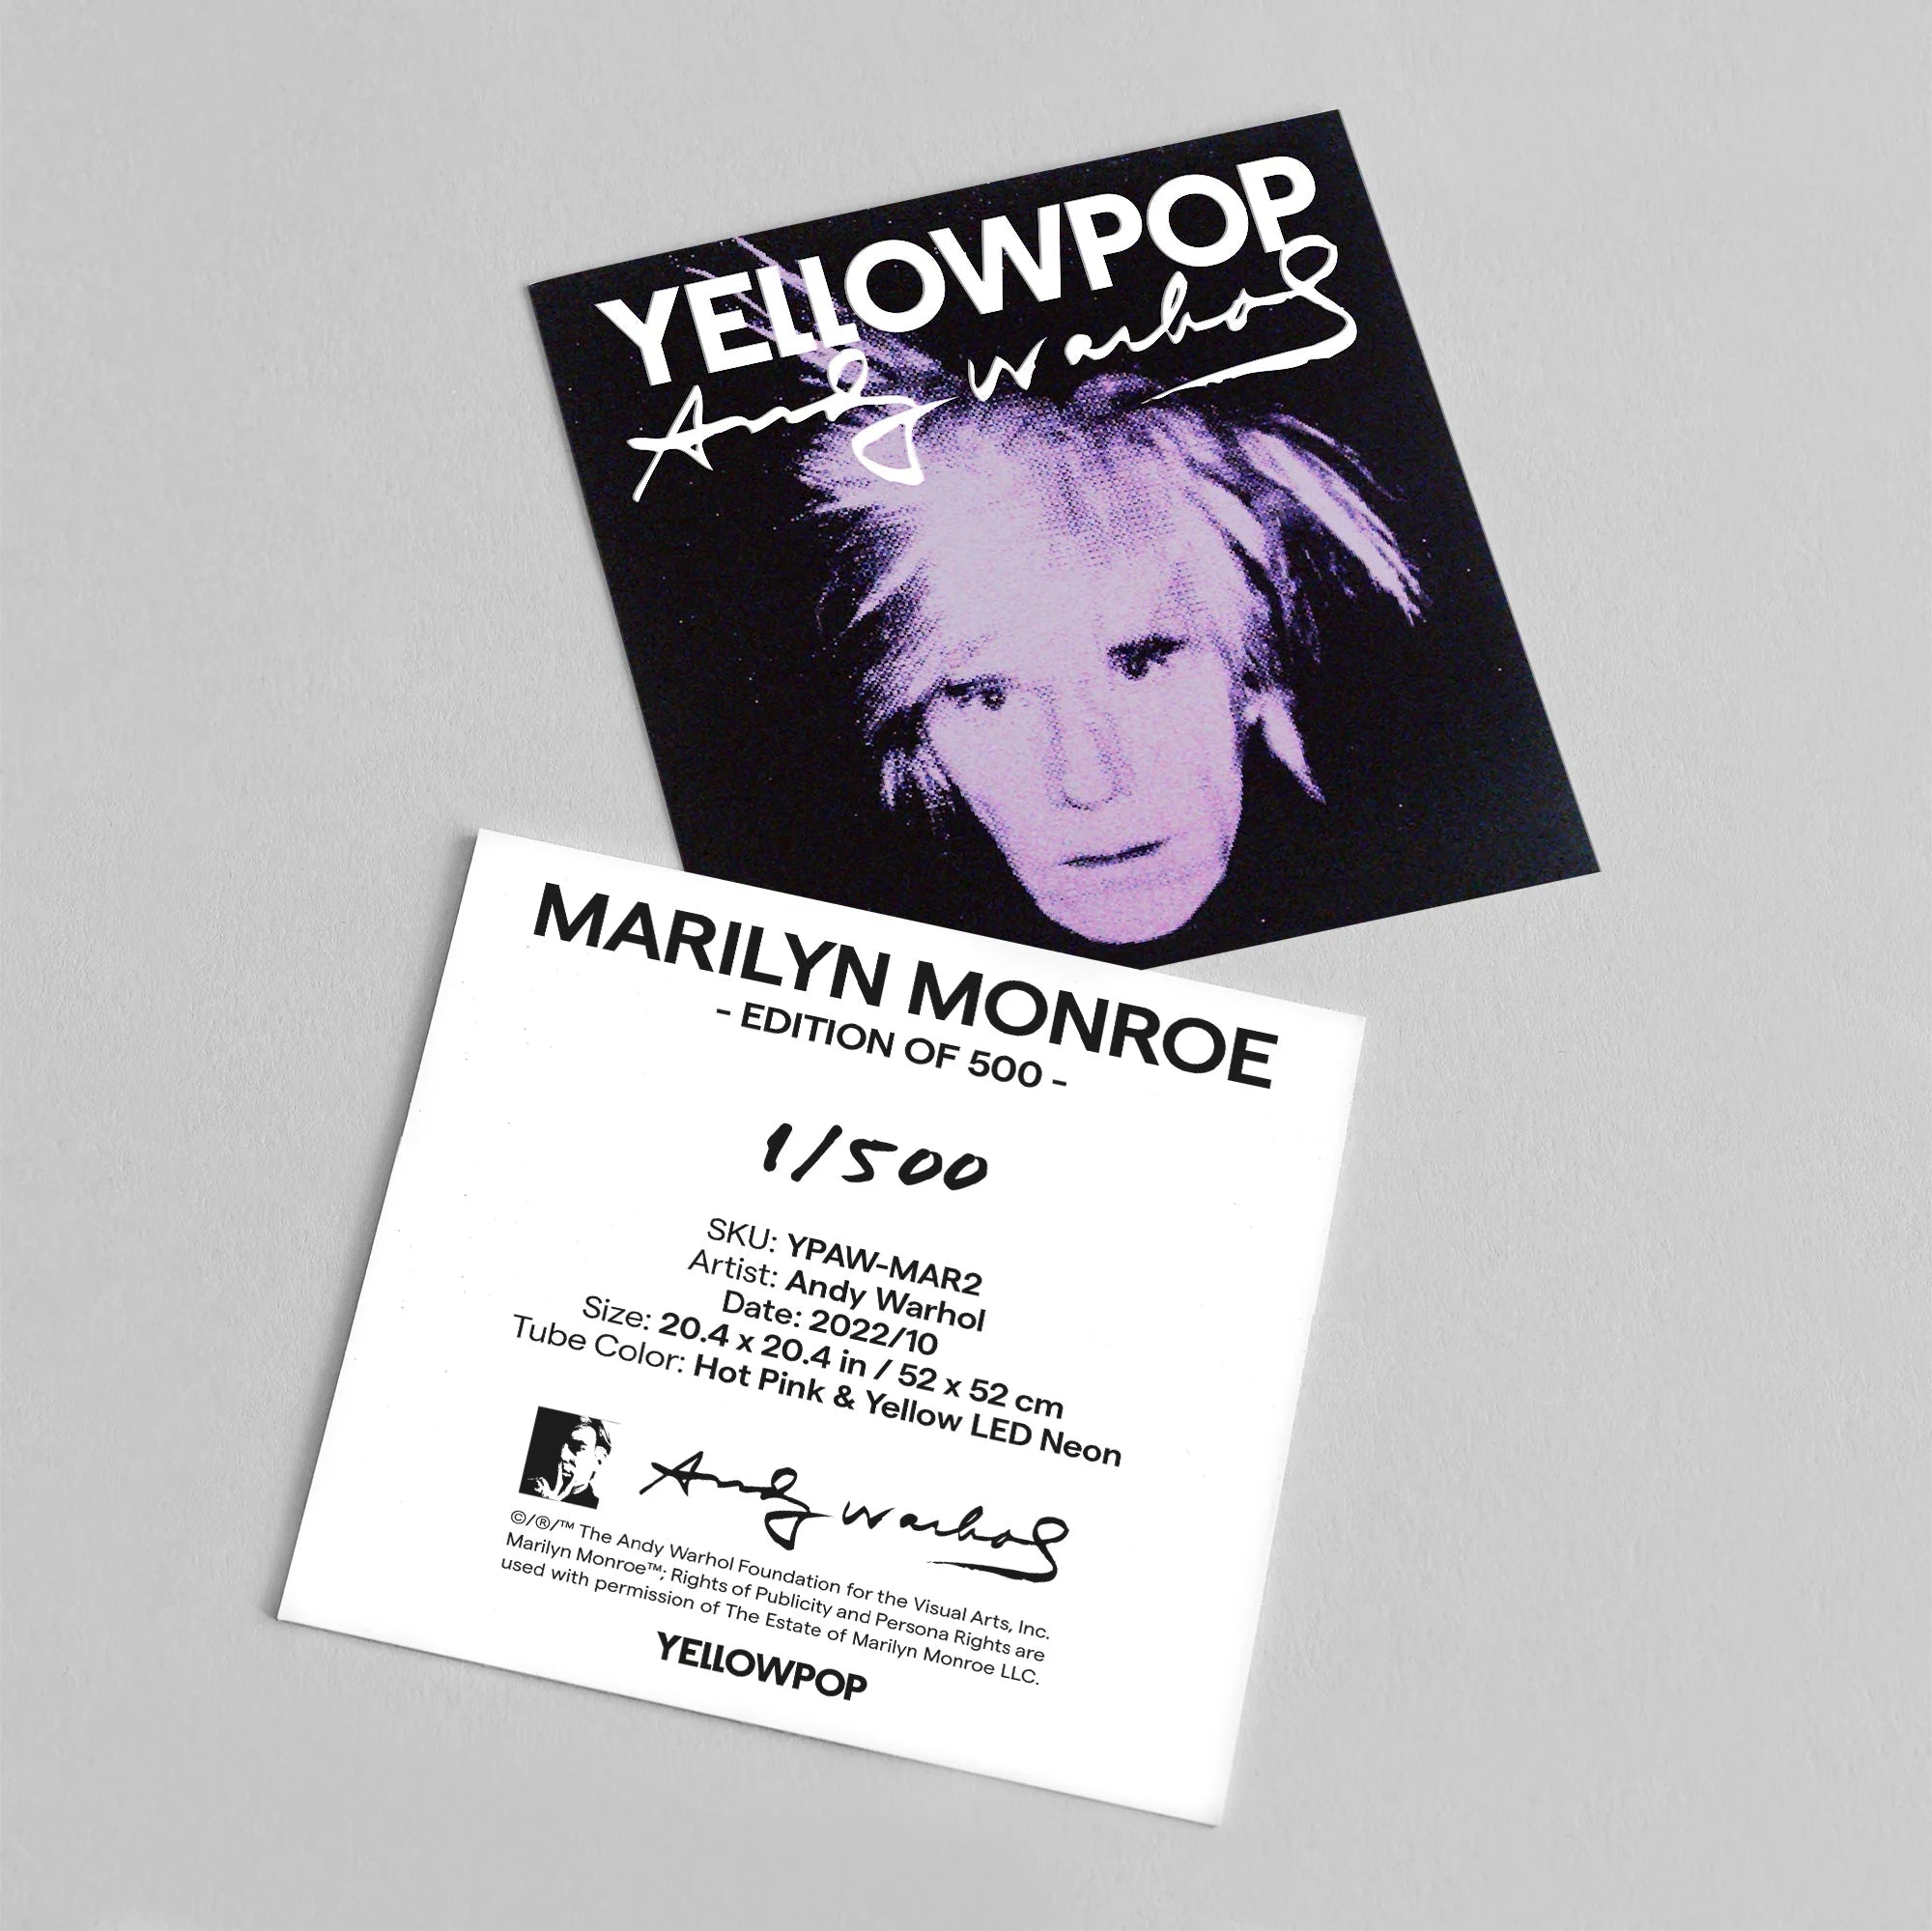 Andy Warhol - 'Marilyn Monroe Small' x YP